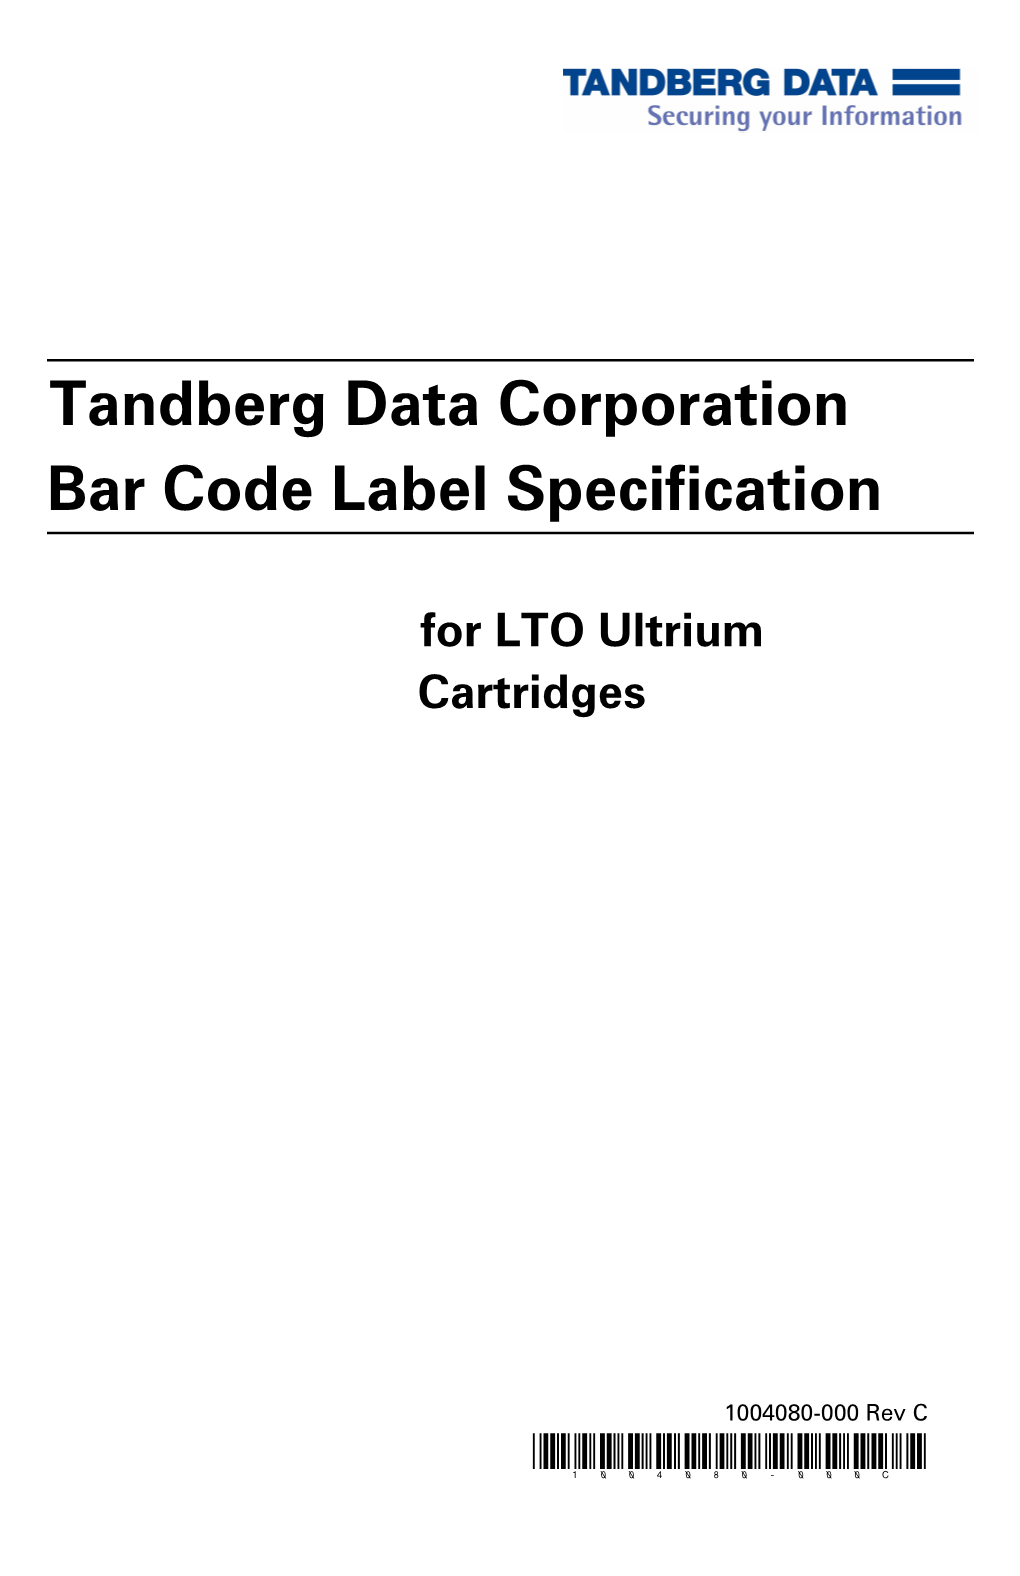 Exabyte Bar Code for LTO Ultrium Cartridges